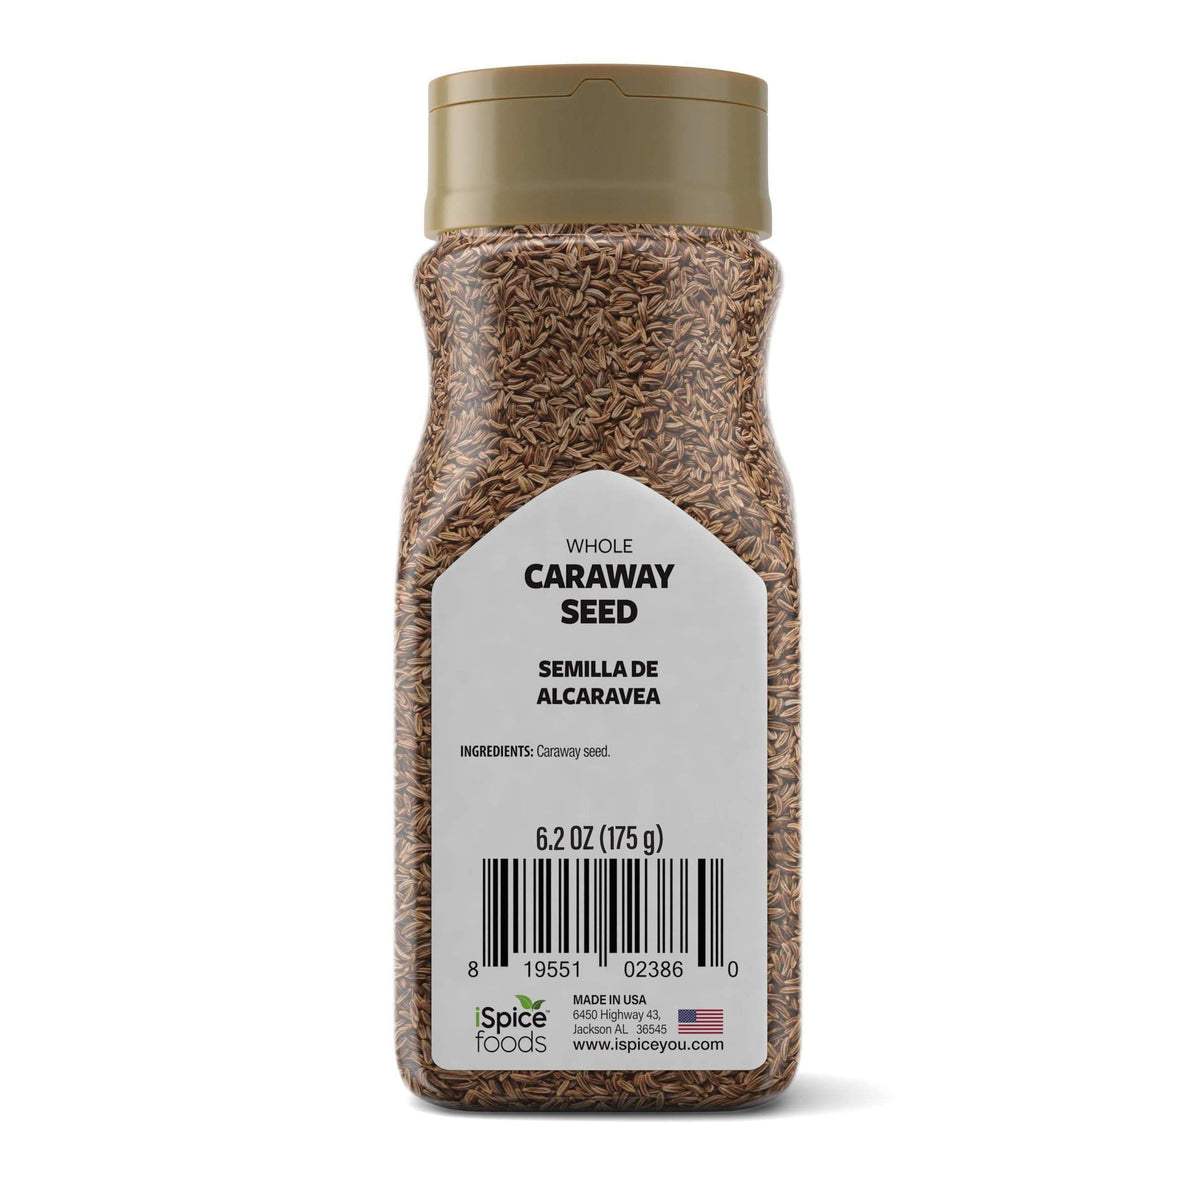 The Healthiest Ways to Enjoy Caraway Seeds